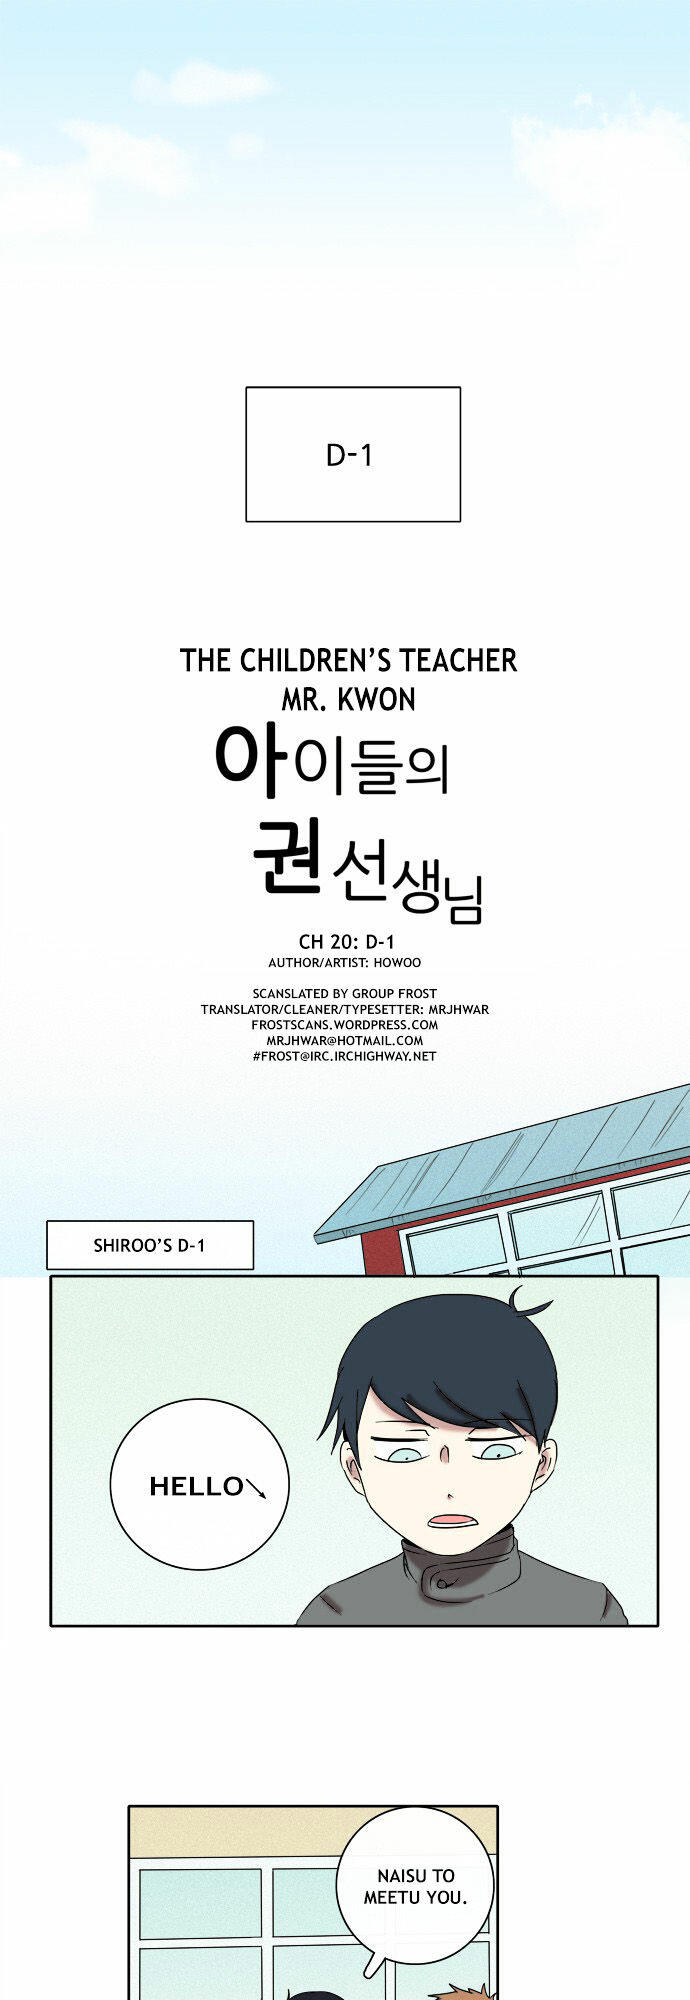 The children's teacher mr kwon